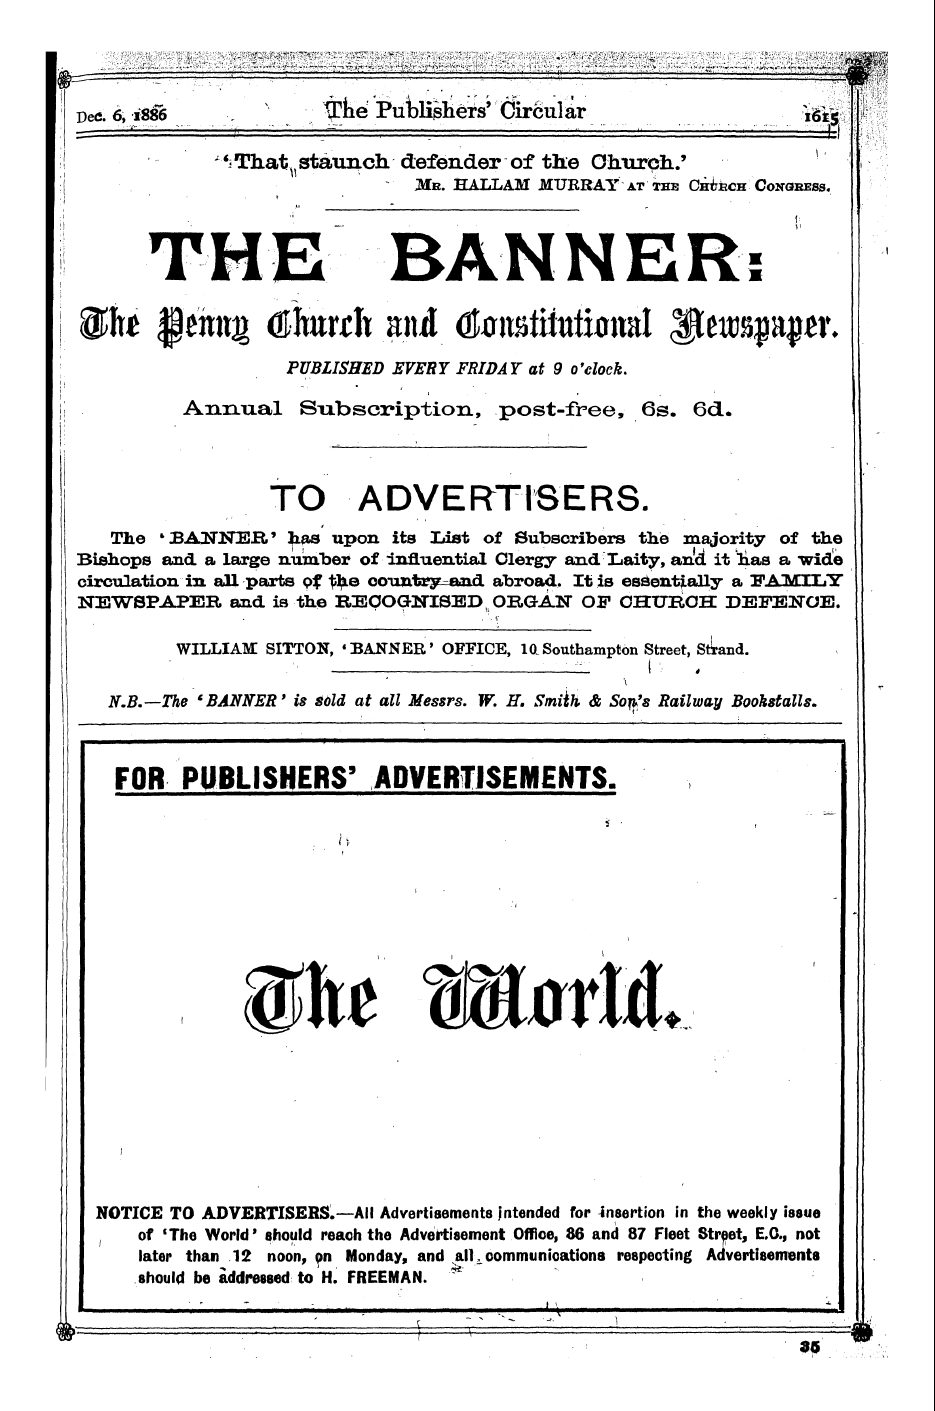 Publishers’ Circular (1880-1890): jS F Y, 1st edition - Ad32701